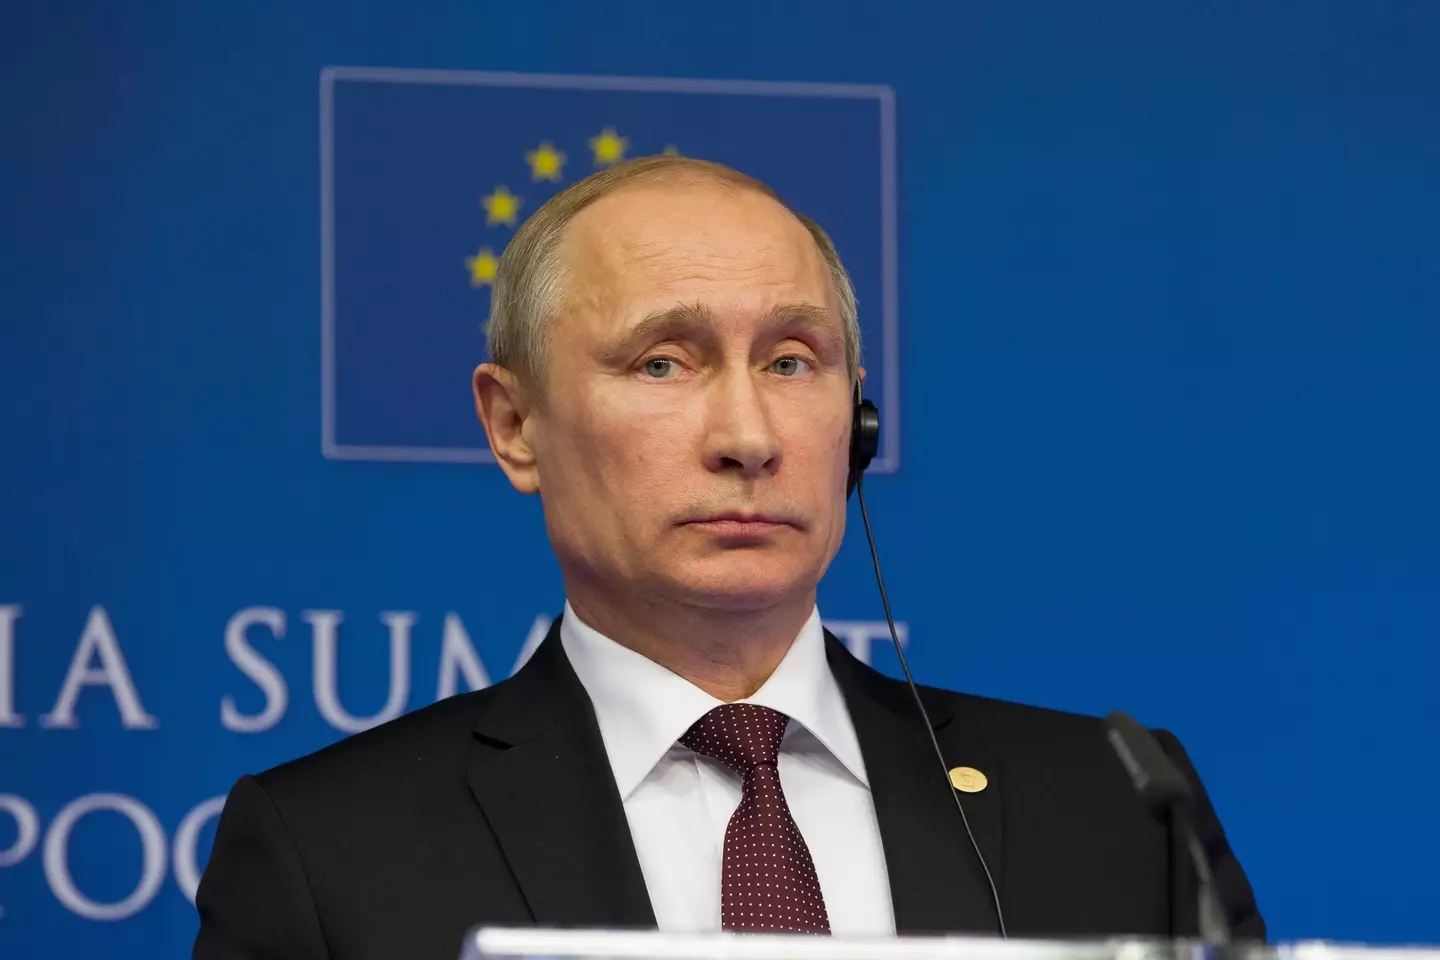 Vladimir Putin declared war on Ukraine in February.